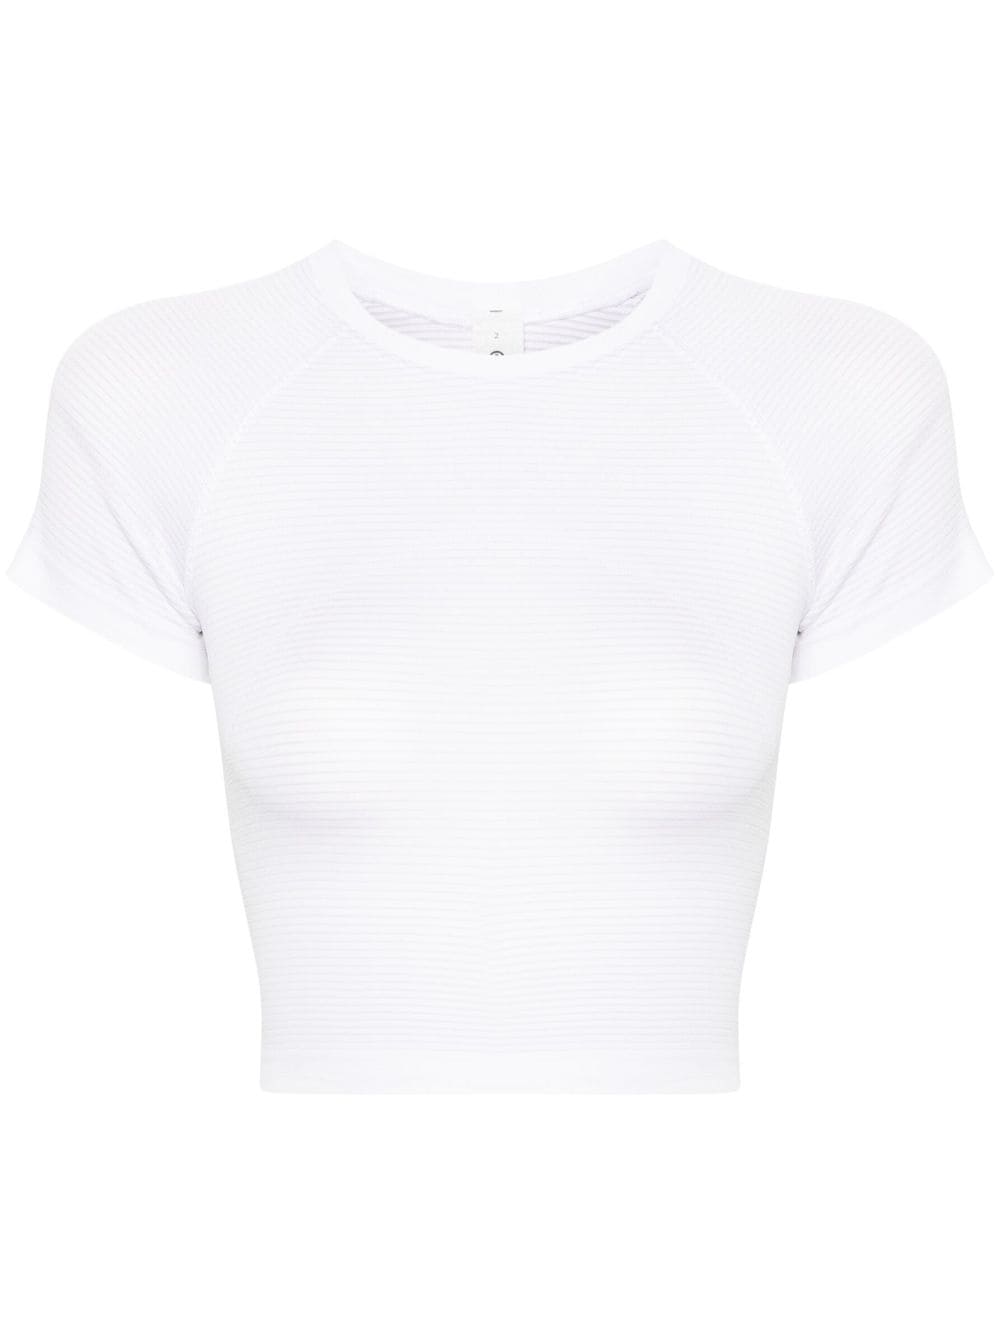 lululemon Swiftly Tech cropped T-shirt - White von lululemon